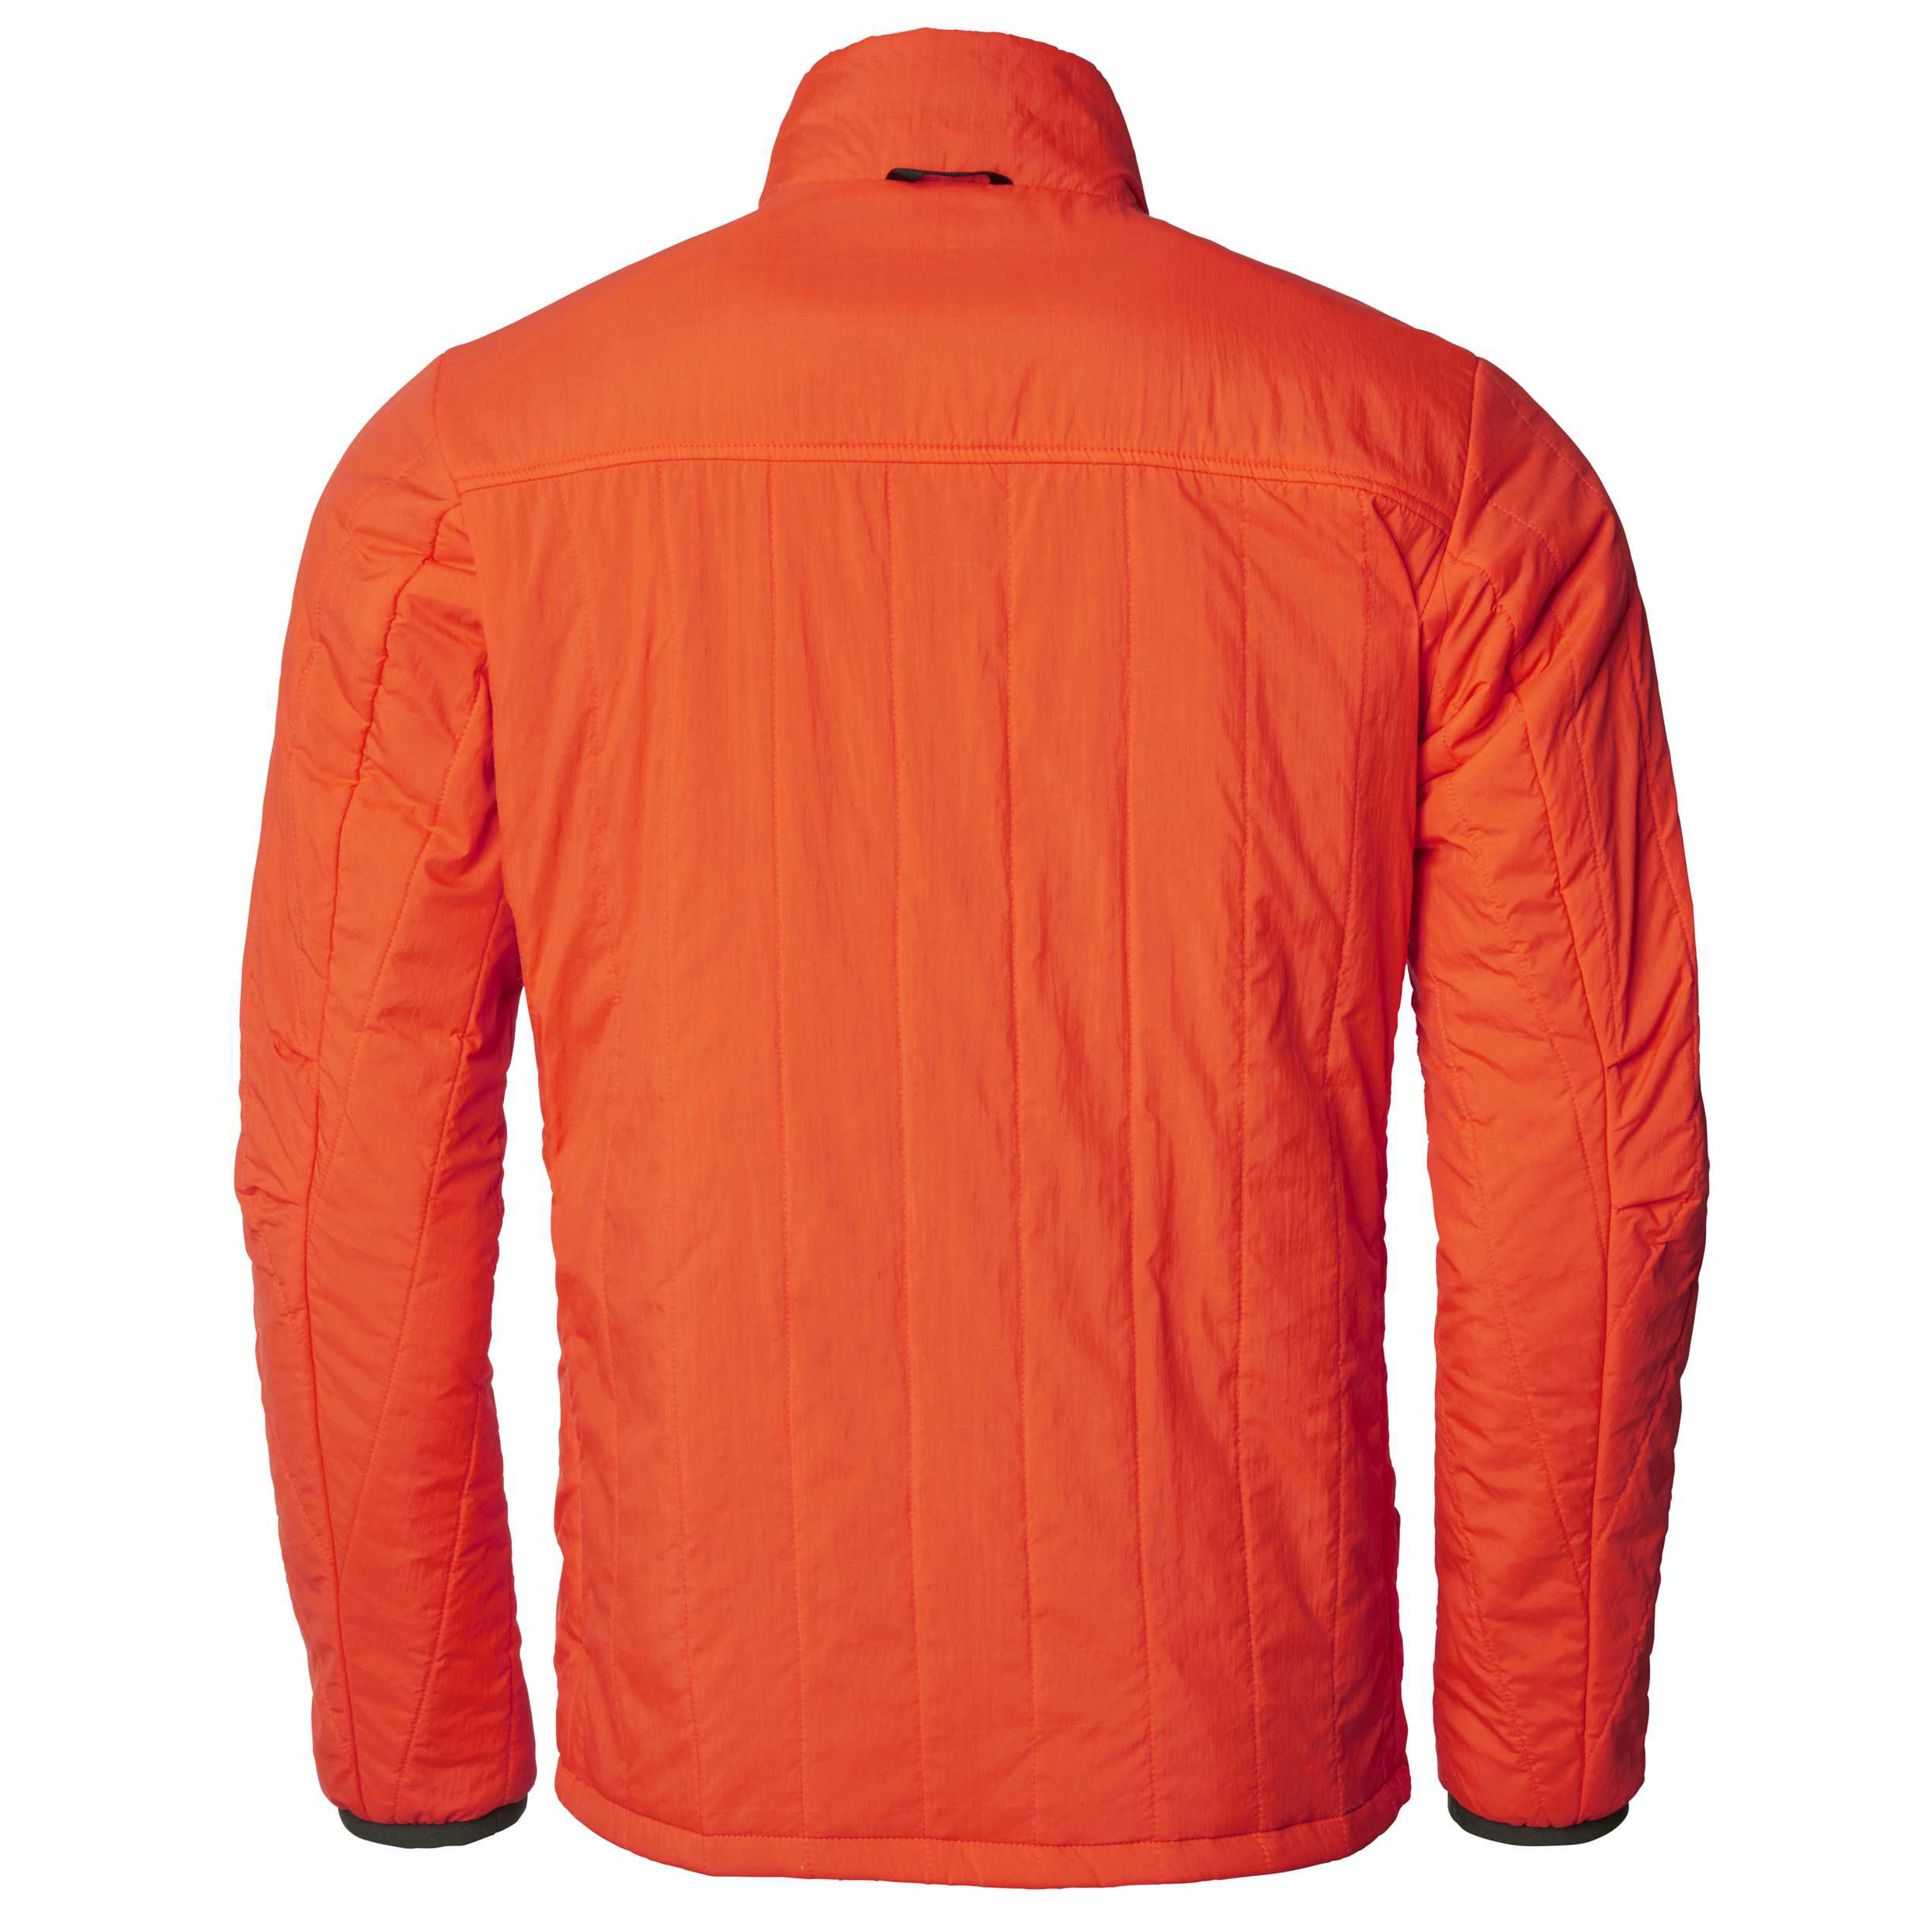 Buy Men's Breeze Jacket High Vis Orange here | Outnorth